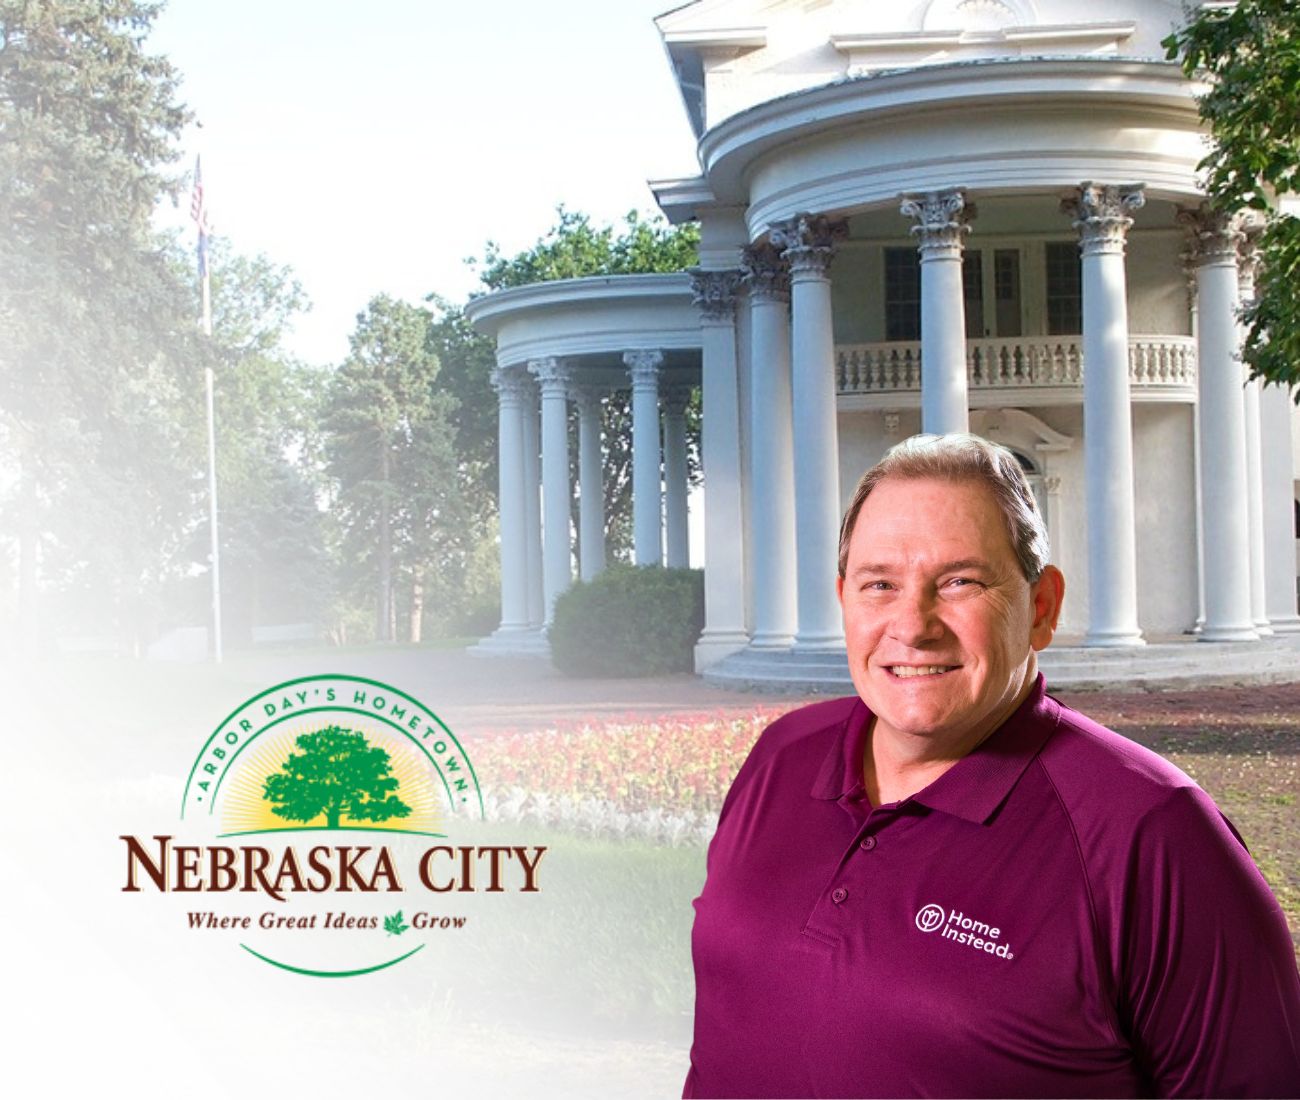 Home Instead caregiver with Nebraska City Nebraska in the background